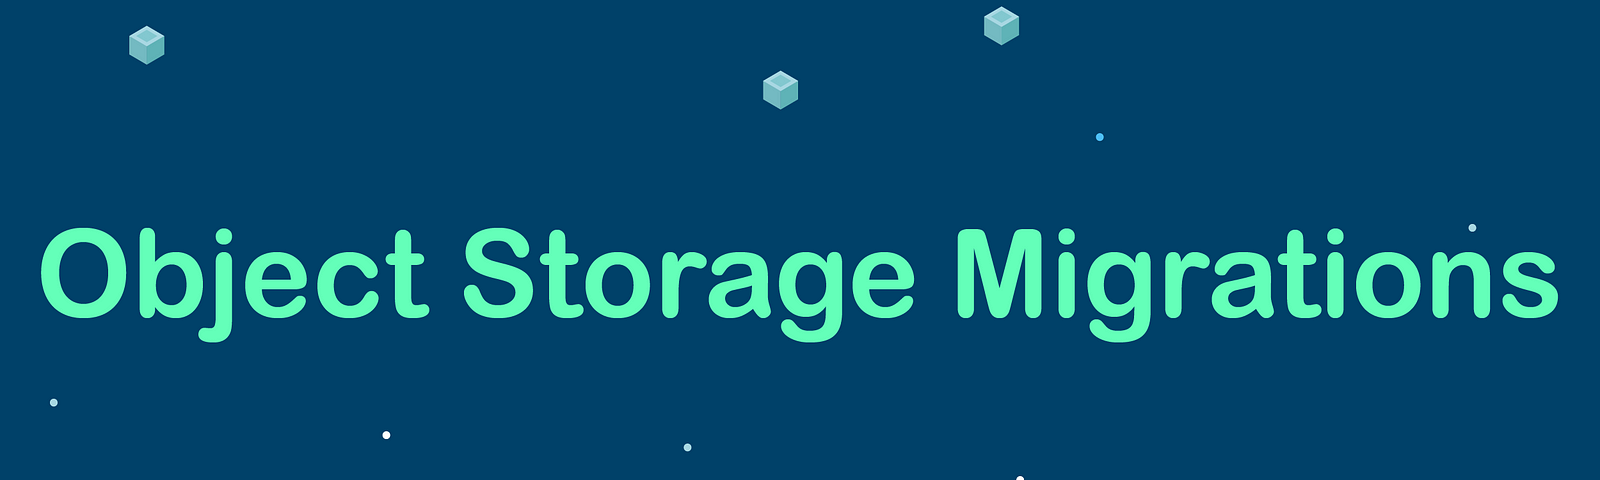 object storage migration tool